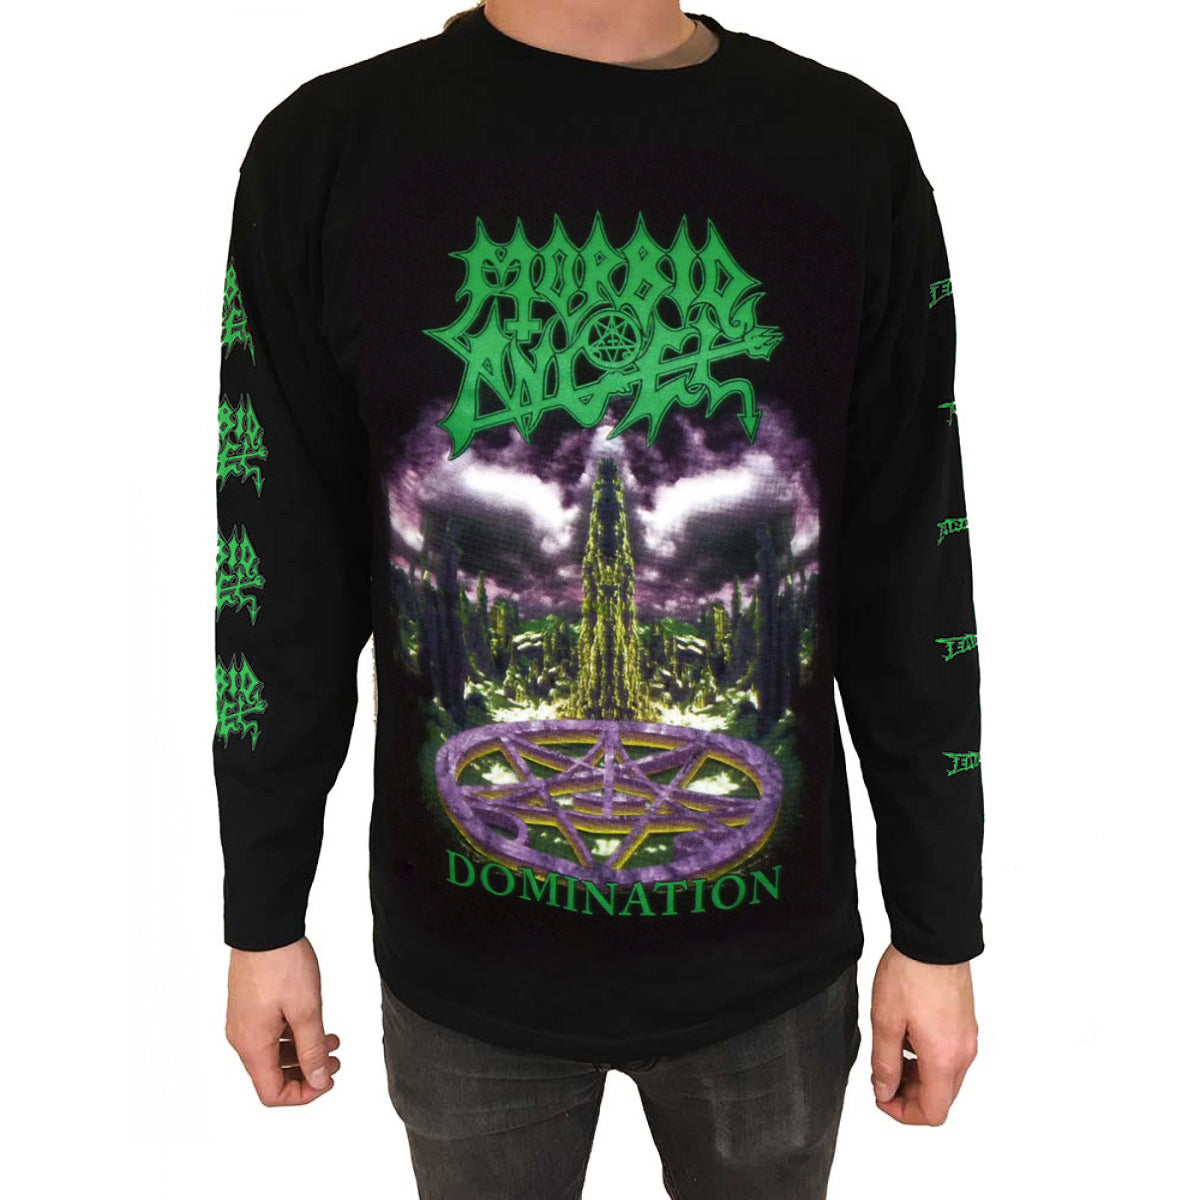 Morbid Angel "Domination" Long Sleeve T-shirt